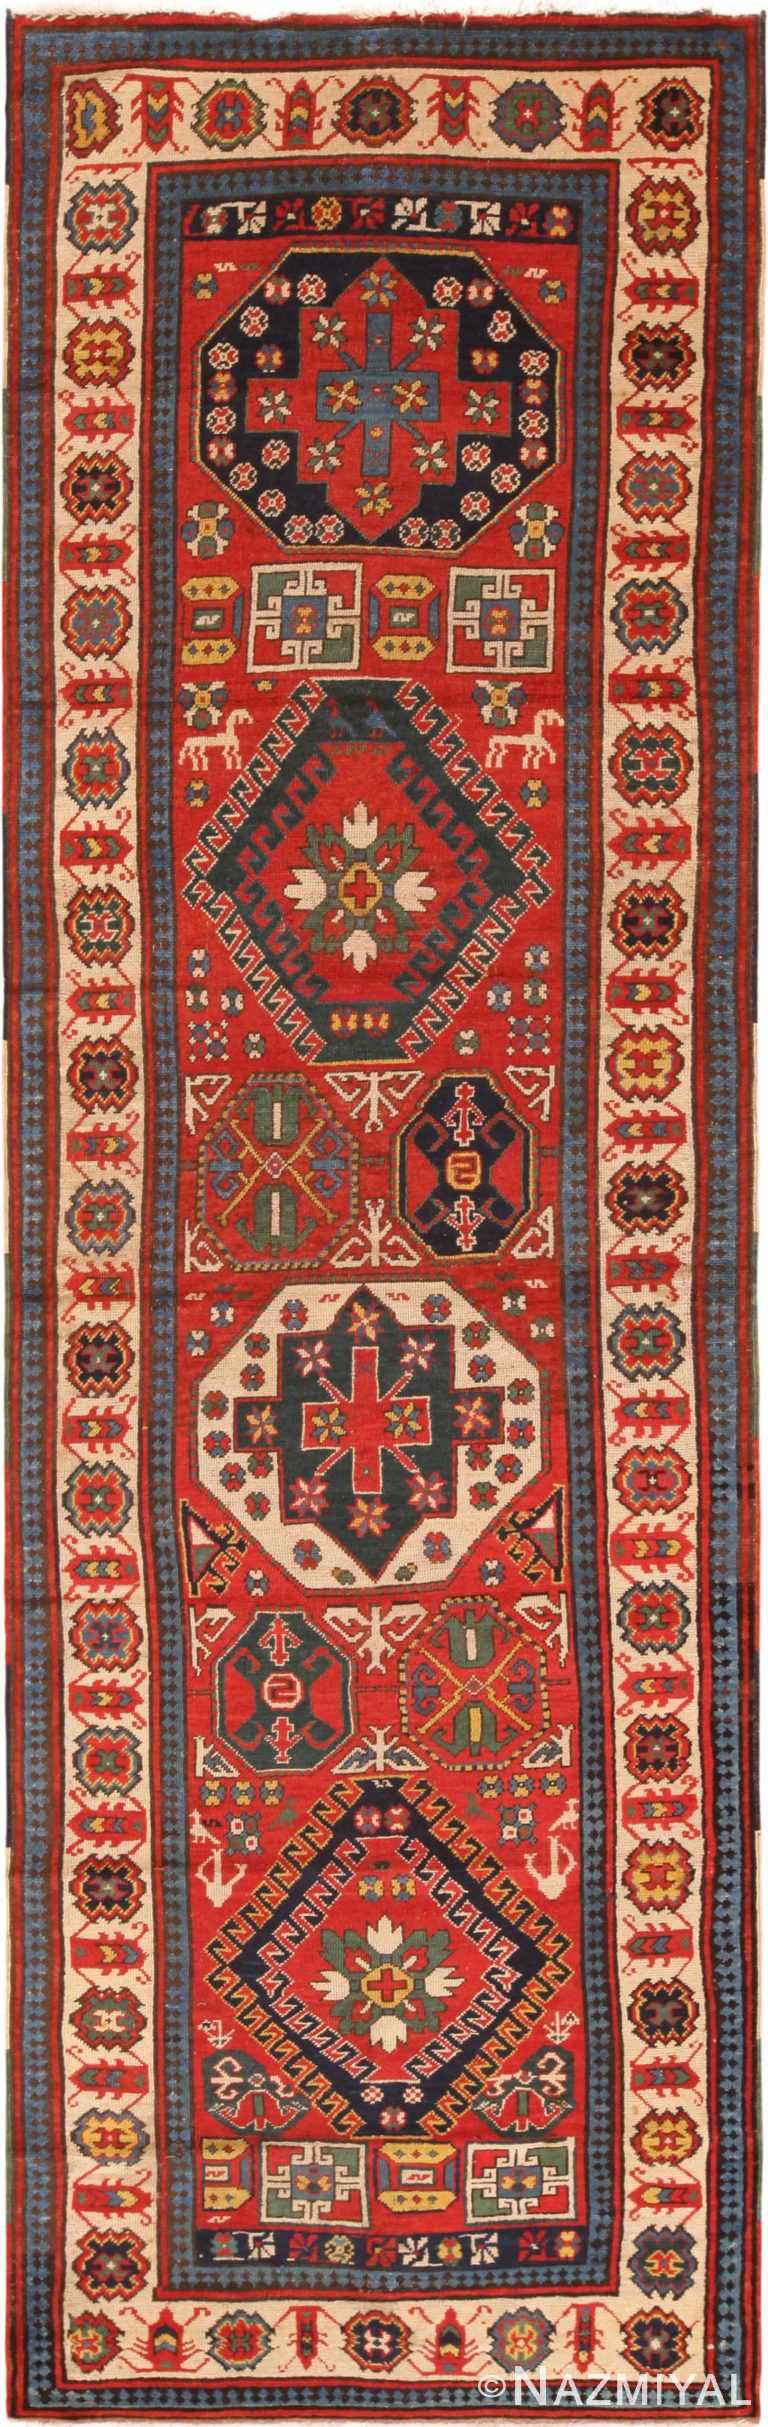 Splendid Antique Caucasian Kazak Rug 71158 by Nazmiyal Antique Rugs